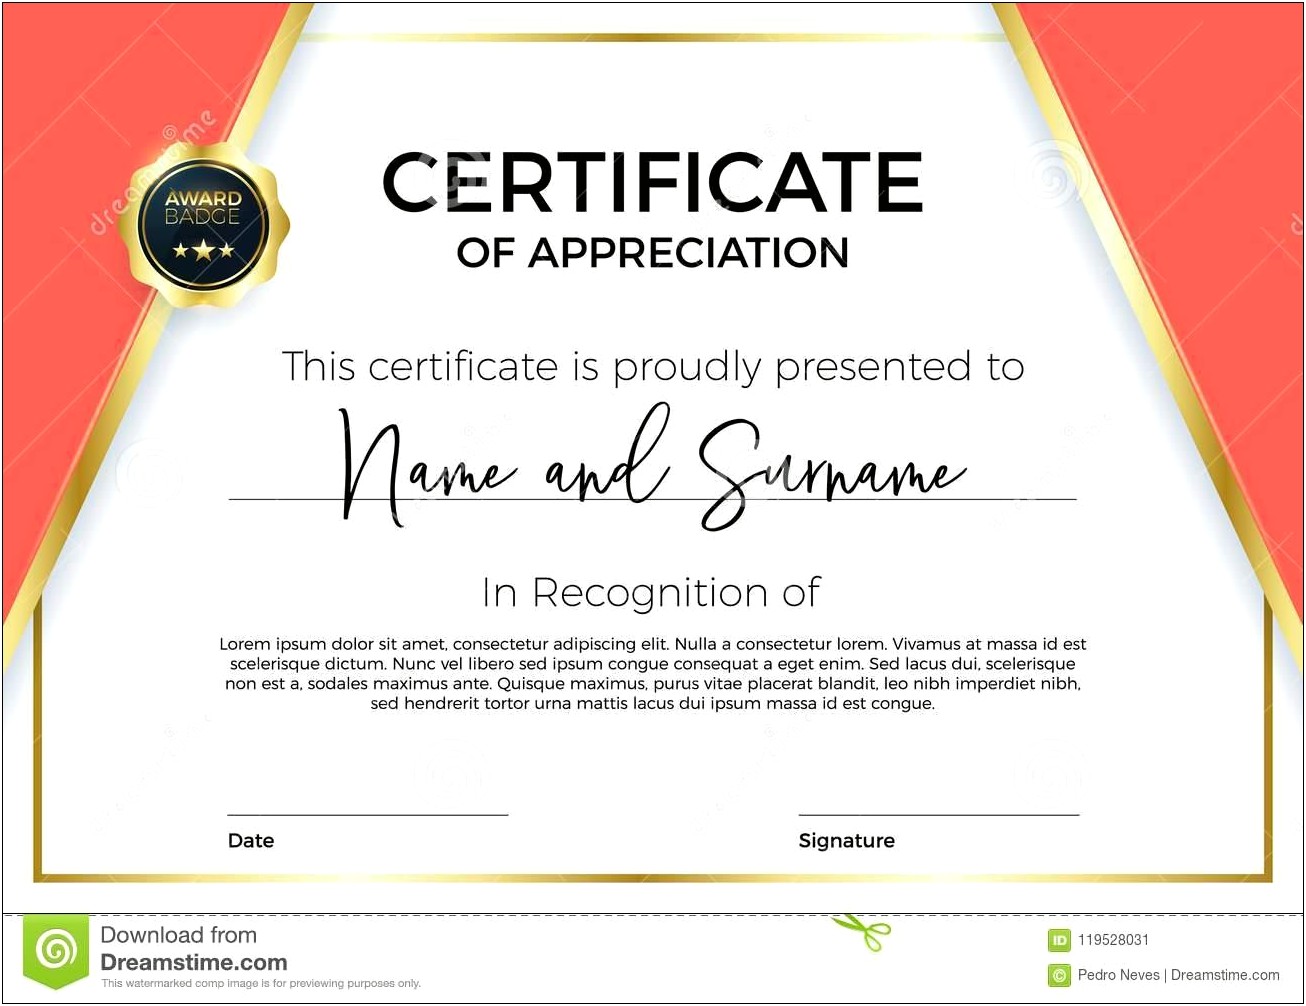 A Certificate Of Appreciation Template Free